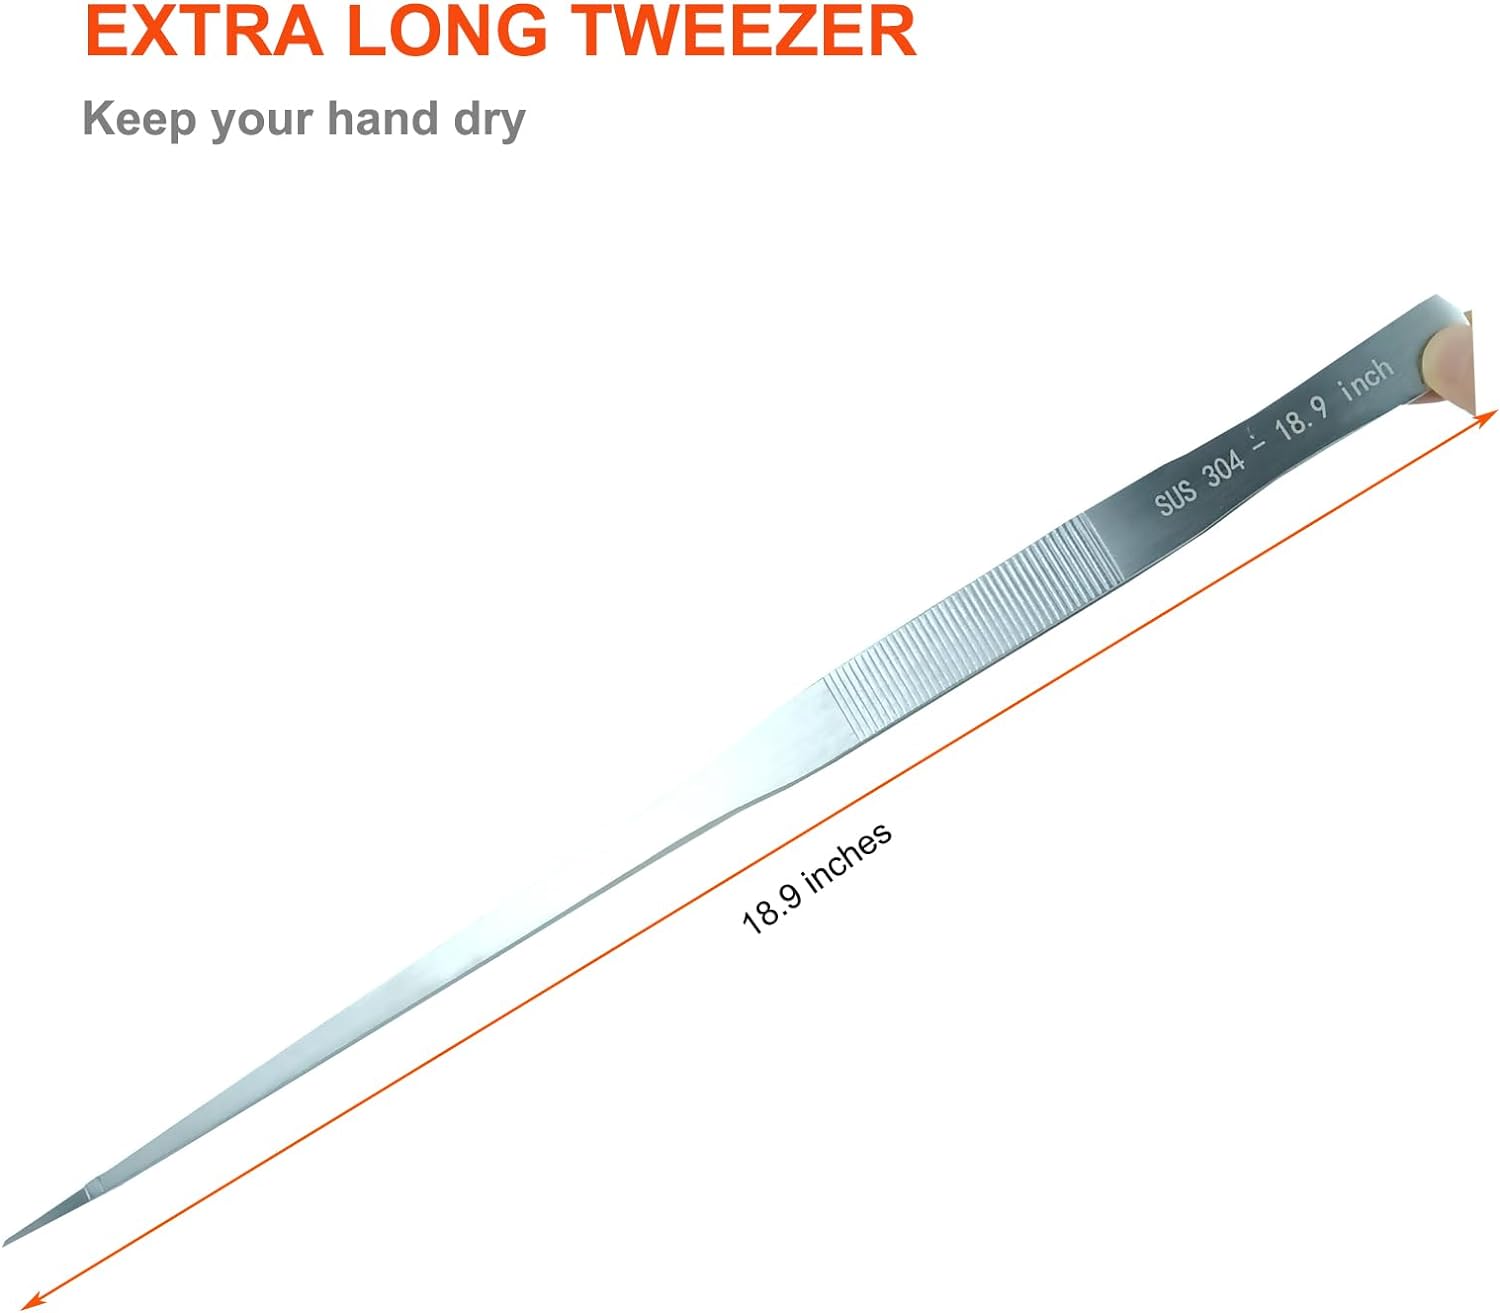 Extra Long Tweezers Review